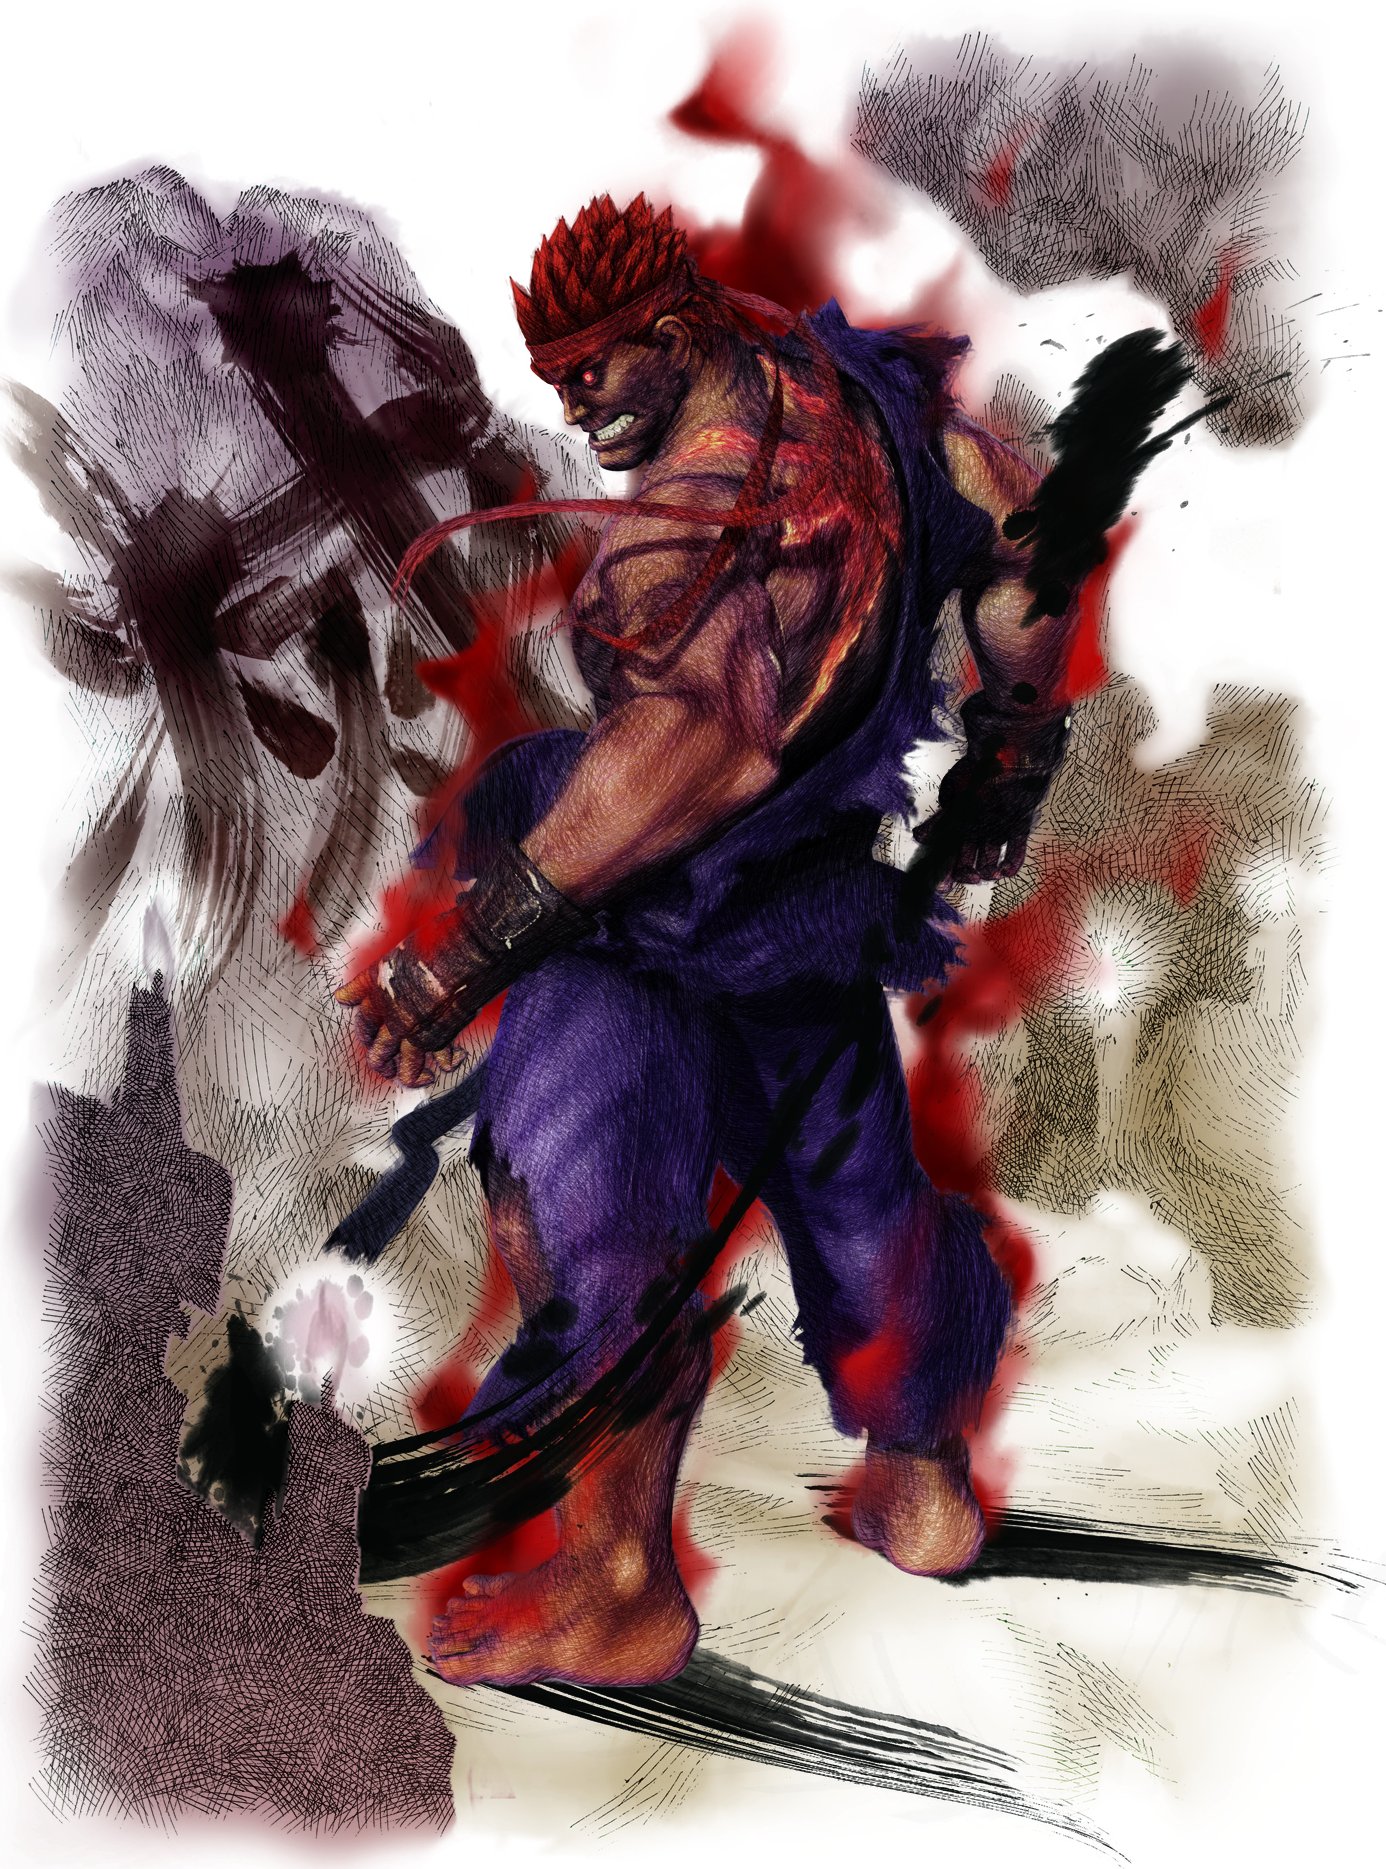 Ryu-Super Street Fighter 4 original painting, HD wallpaper